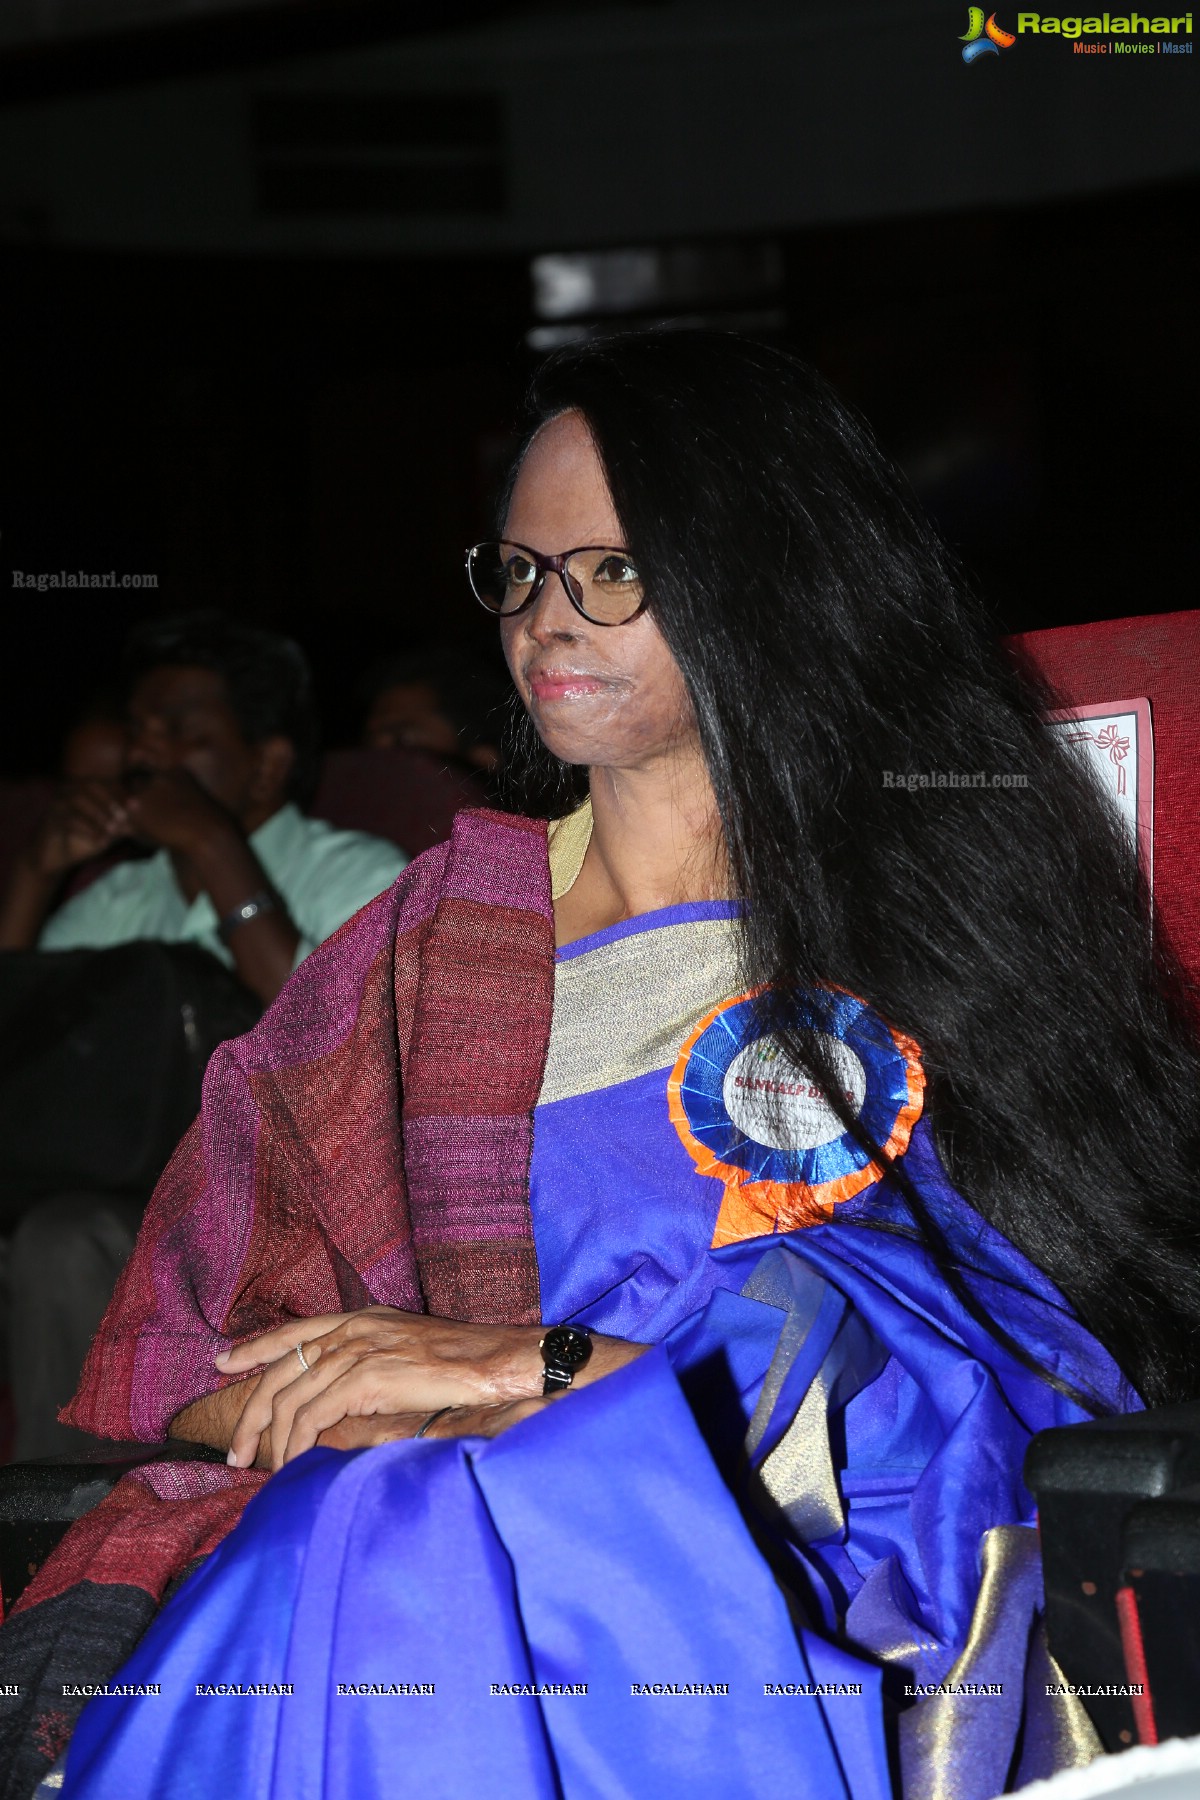 Suchirindia 'Sankalp Divas' - Felicitates Ms. Laxmi Agarwal, Acid Attack Survivor @ Ravindra Bharathi